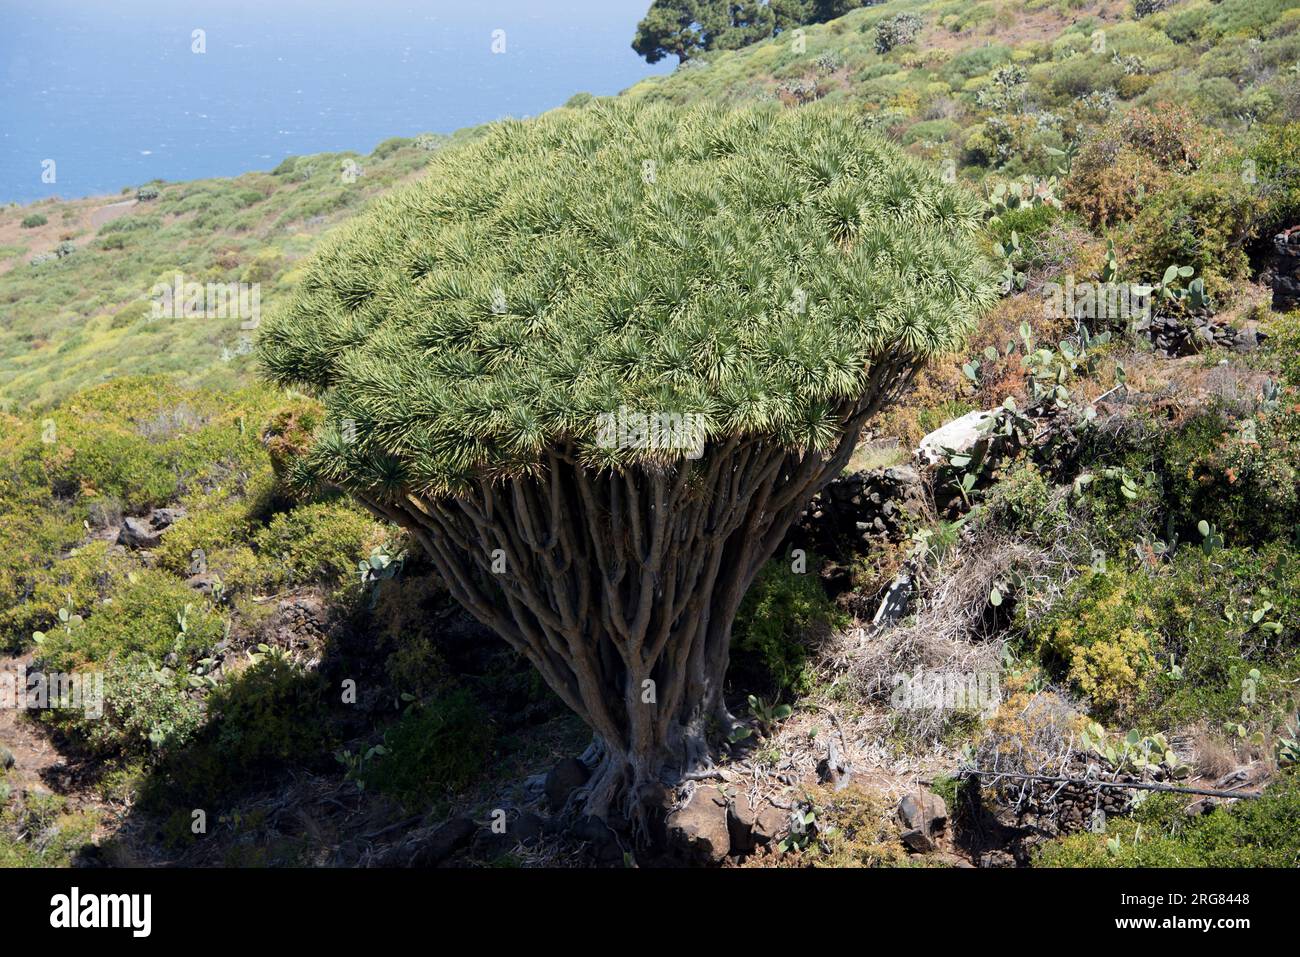 Drago or Canary Islands dragon tree (Dracaena draco) is a tree-like plant native of Macaronesia Region. Las Tricias, Garafía, La Palma Island, Canary Stock Photo